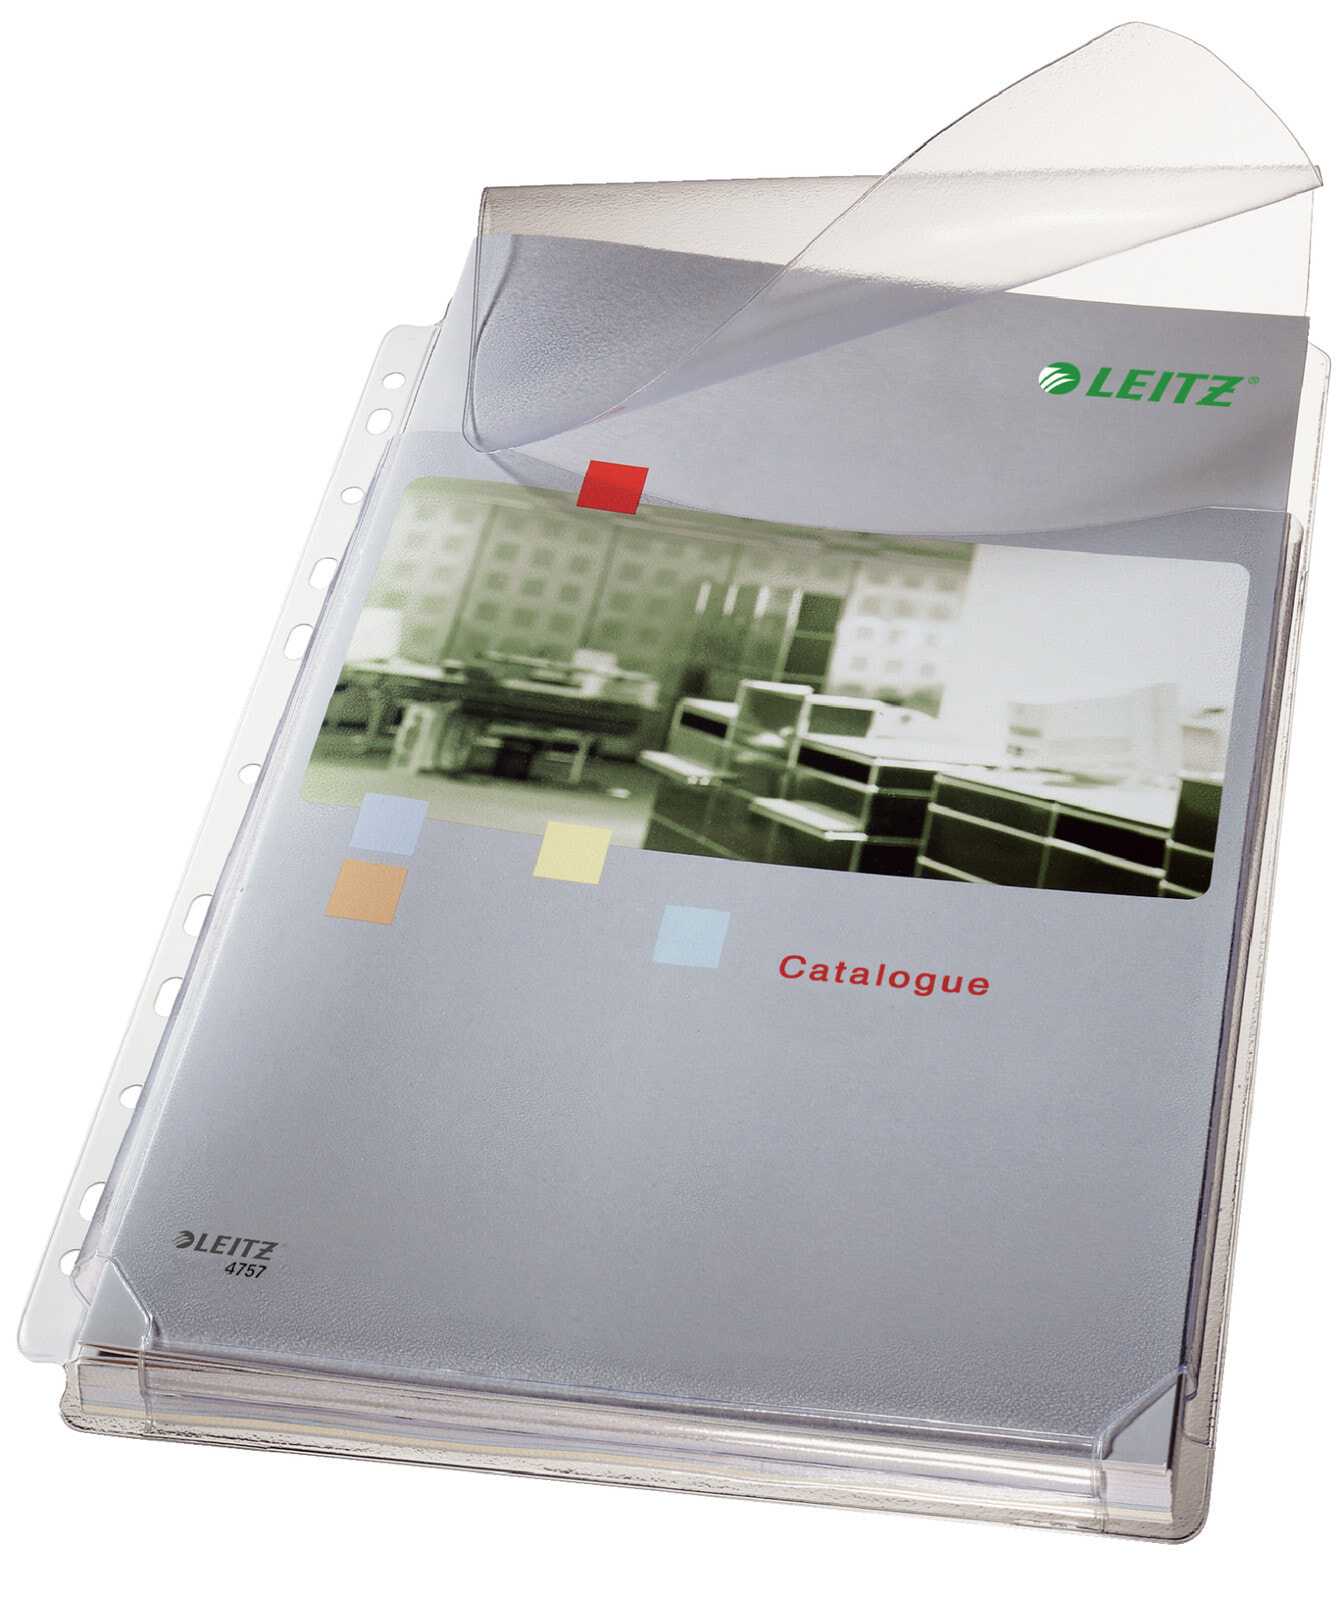 Leitz 47573003 файл для документов 210 x 297 mm (A4) ПВХ 5 шт